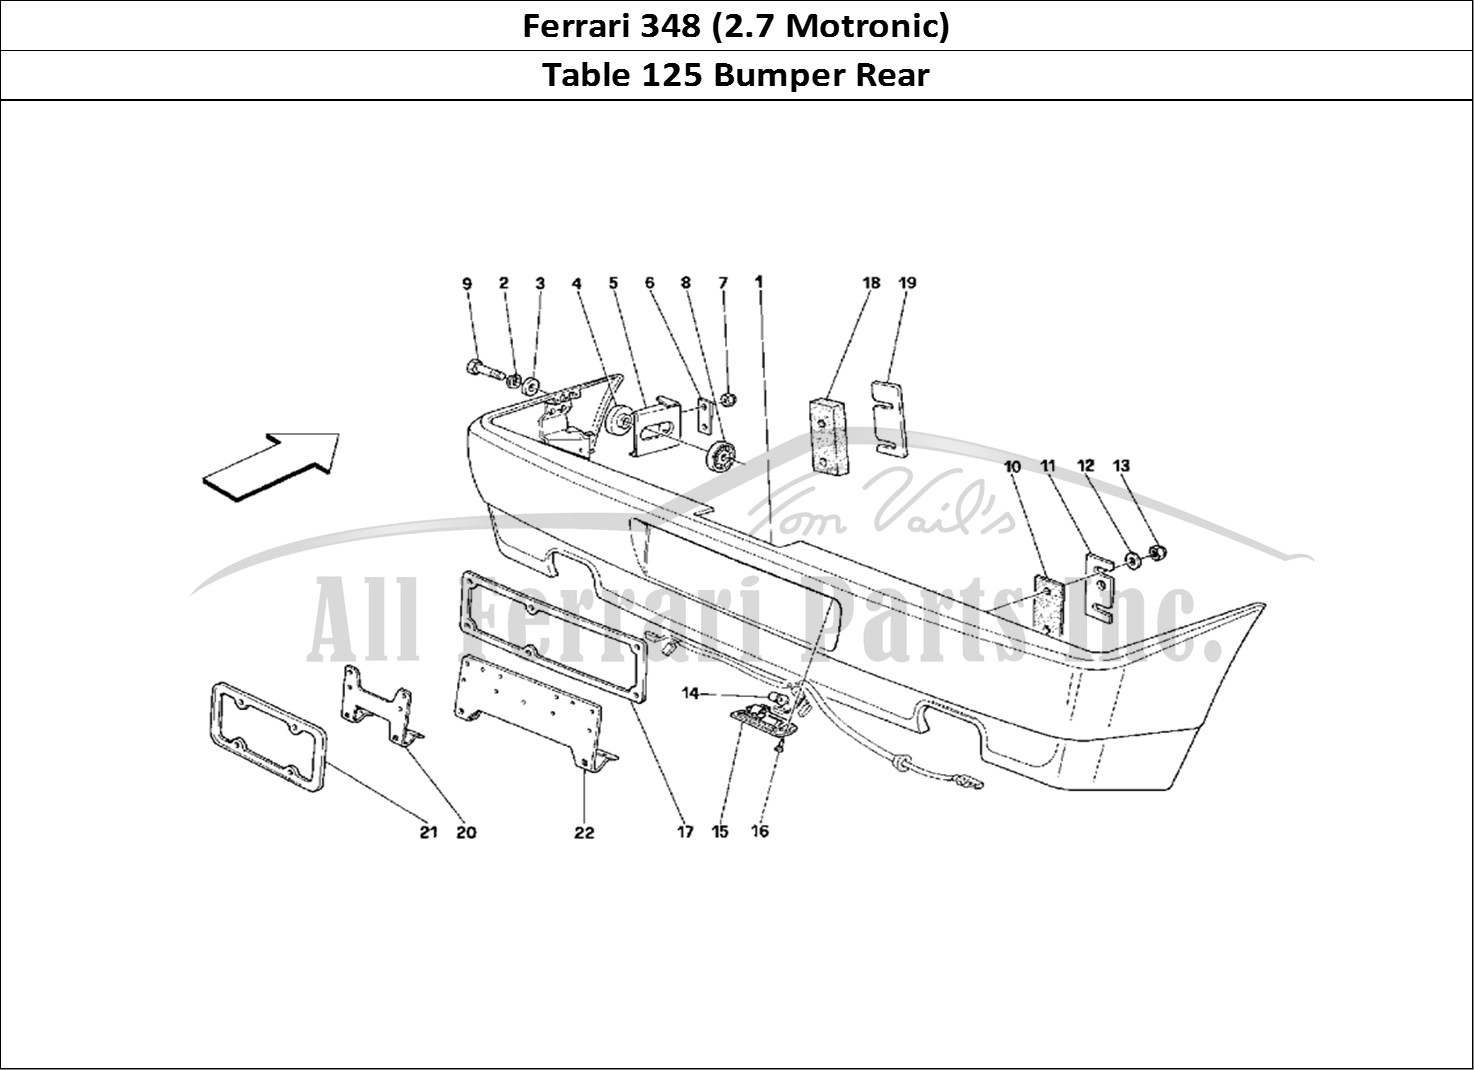 Ferrari Parts Ferrari 348 (2.7 Motronic) Page 125 Rear Bumper